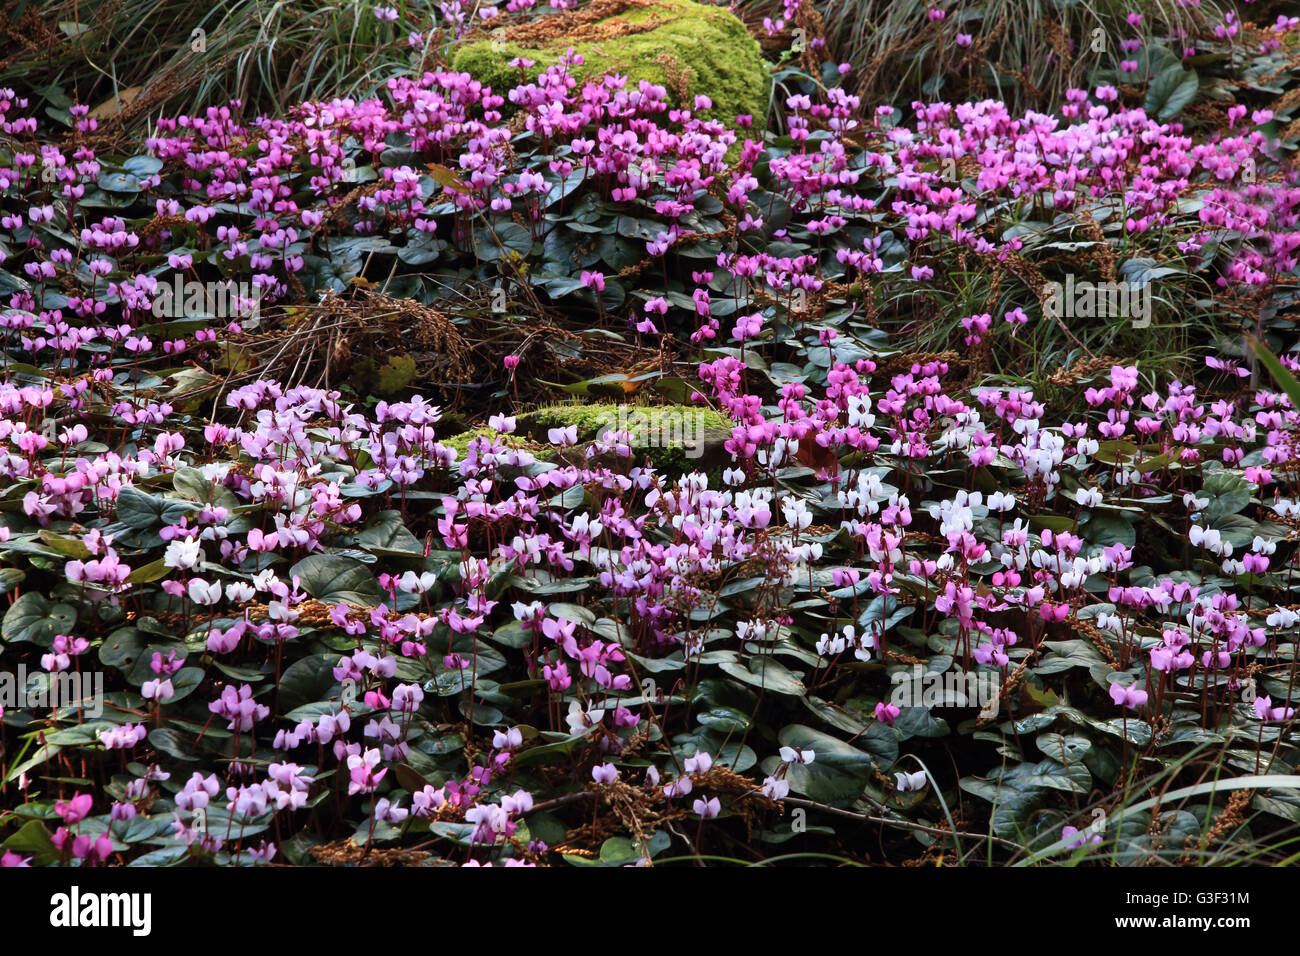 sowbread, Cyclamen purpurascens Stock Photo